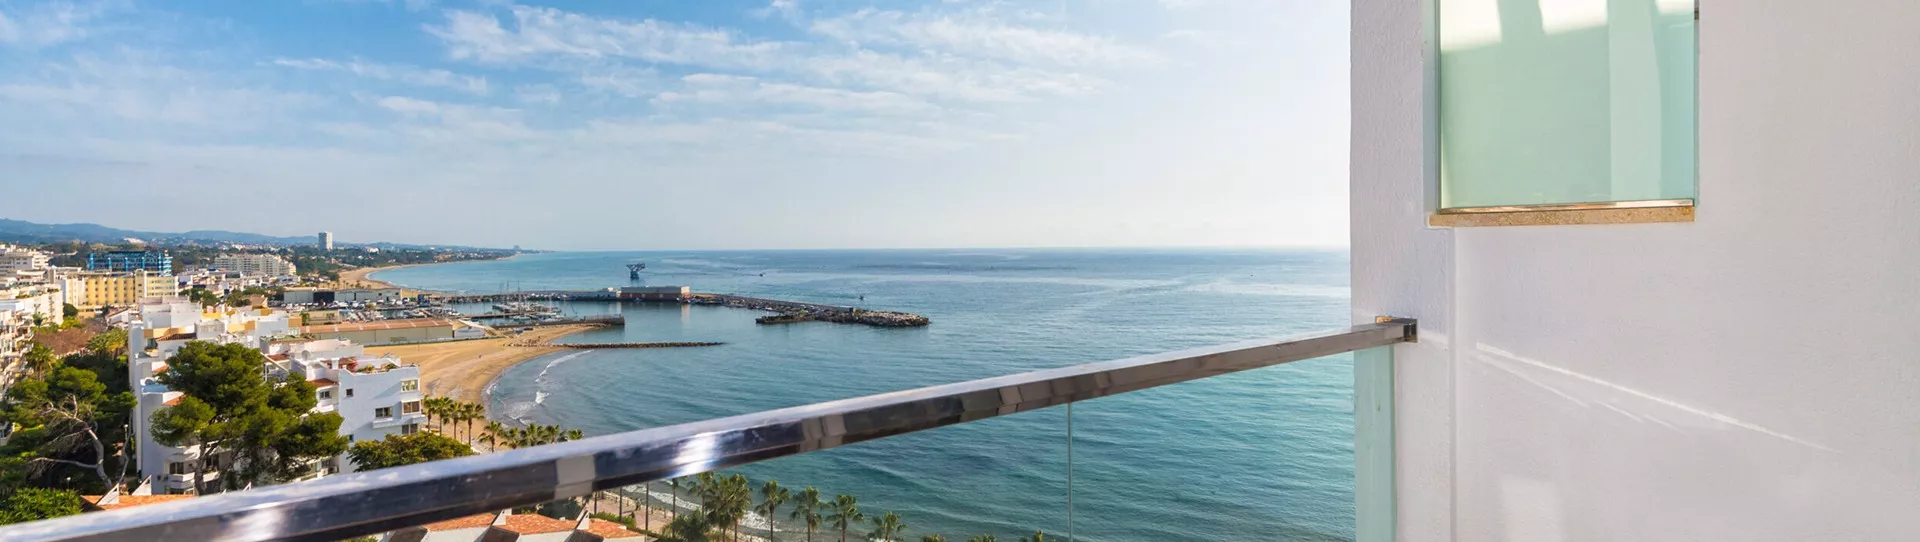 Spain golf holidays - Amàre Marbella Beach Hotel - Photo 1